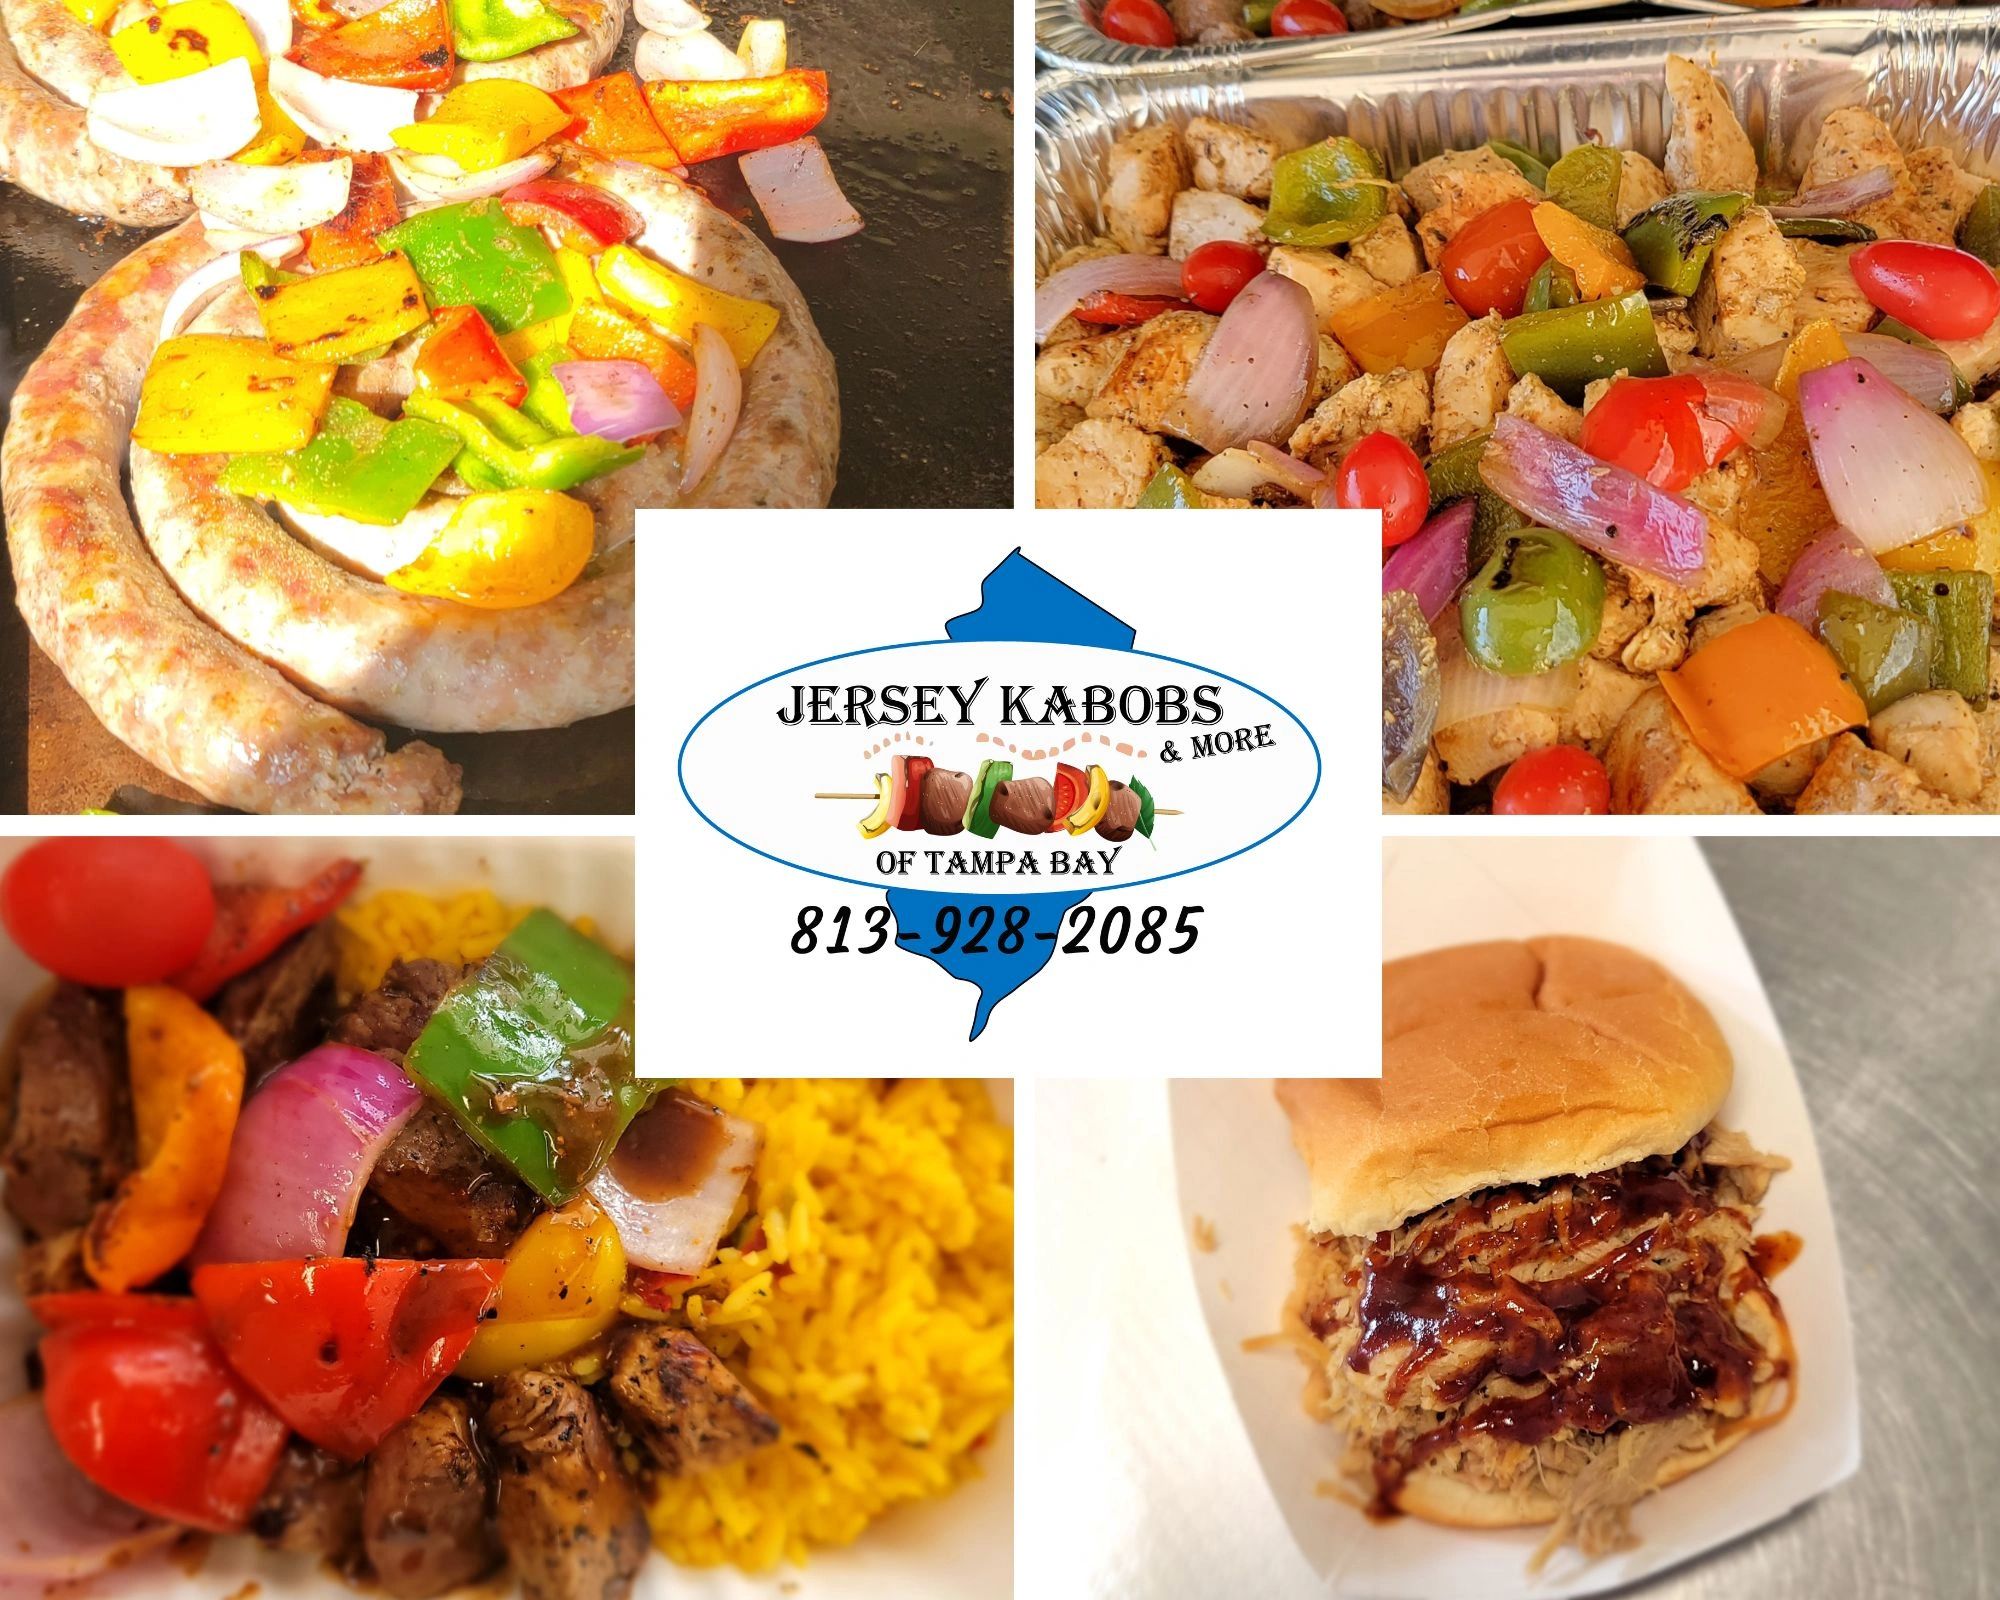 Jersey Kabobs - Food Truck, Steak, Chicken, Sausage and More